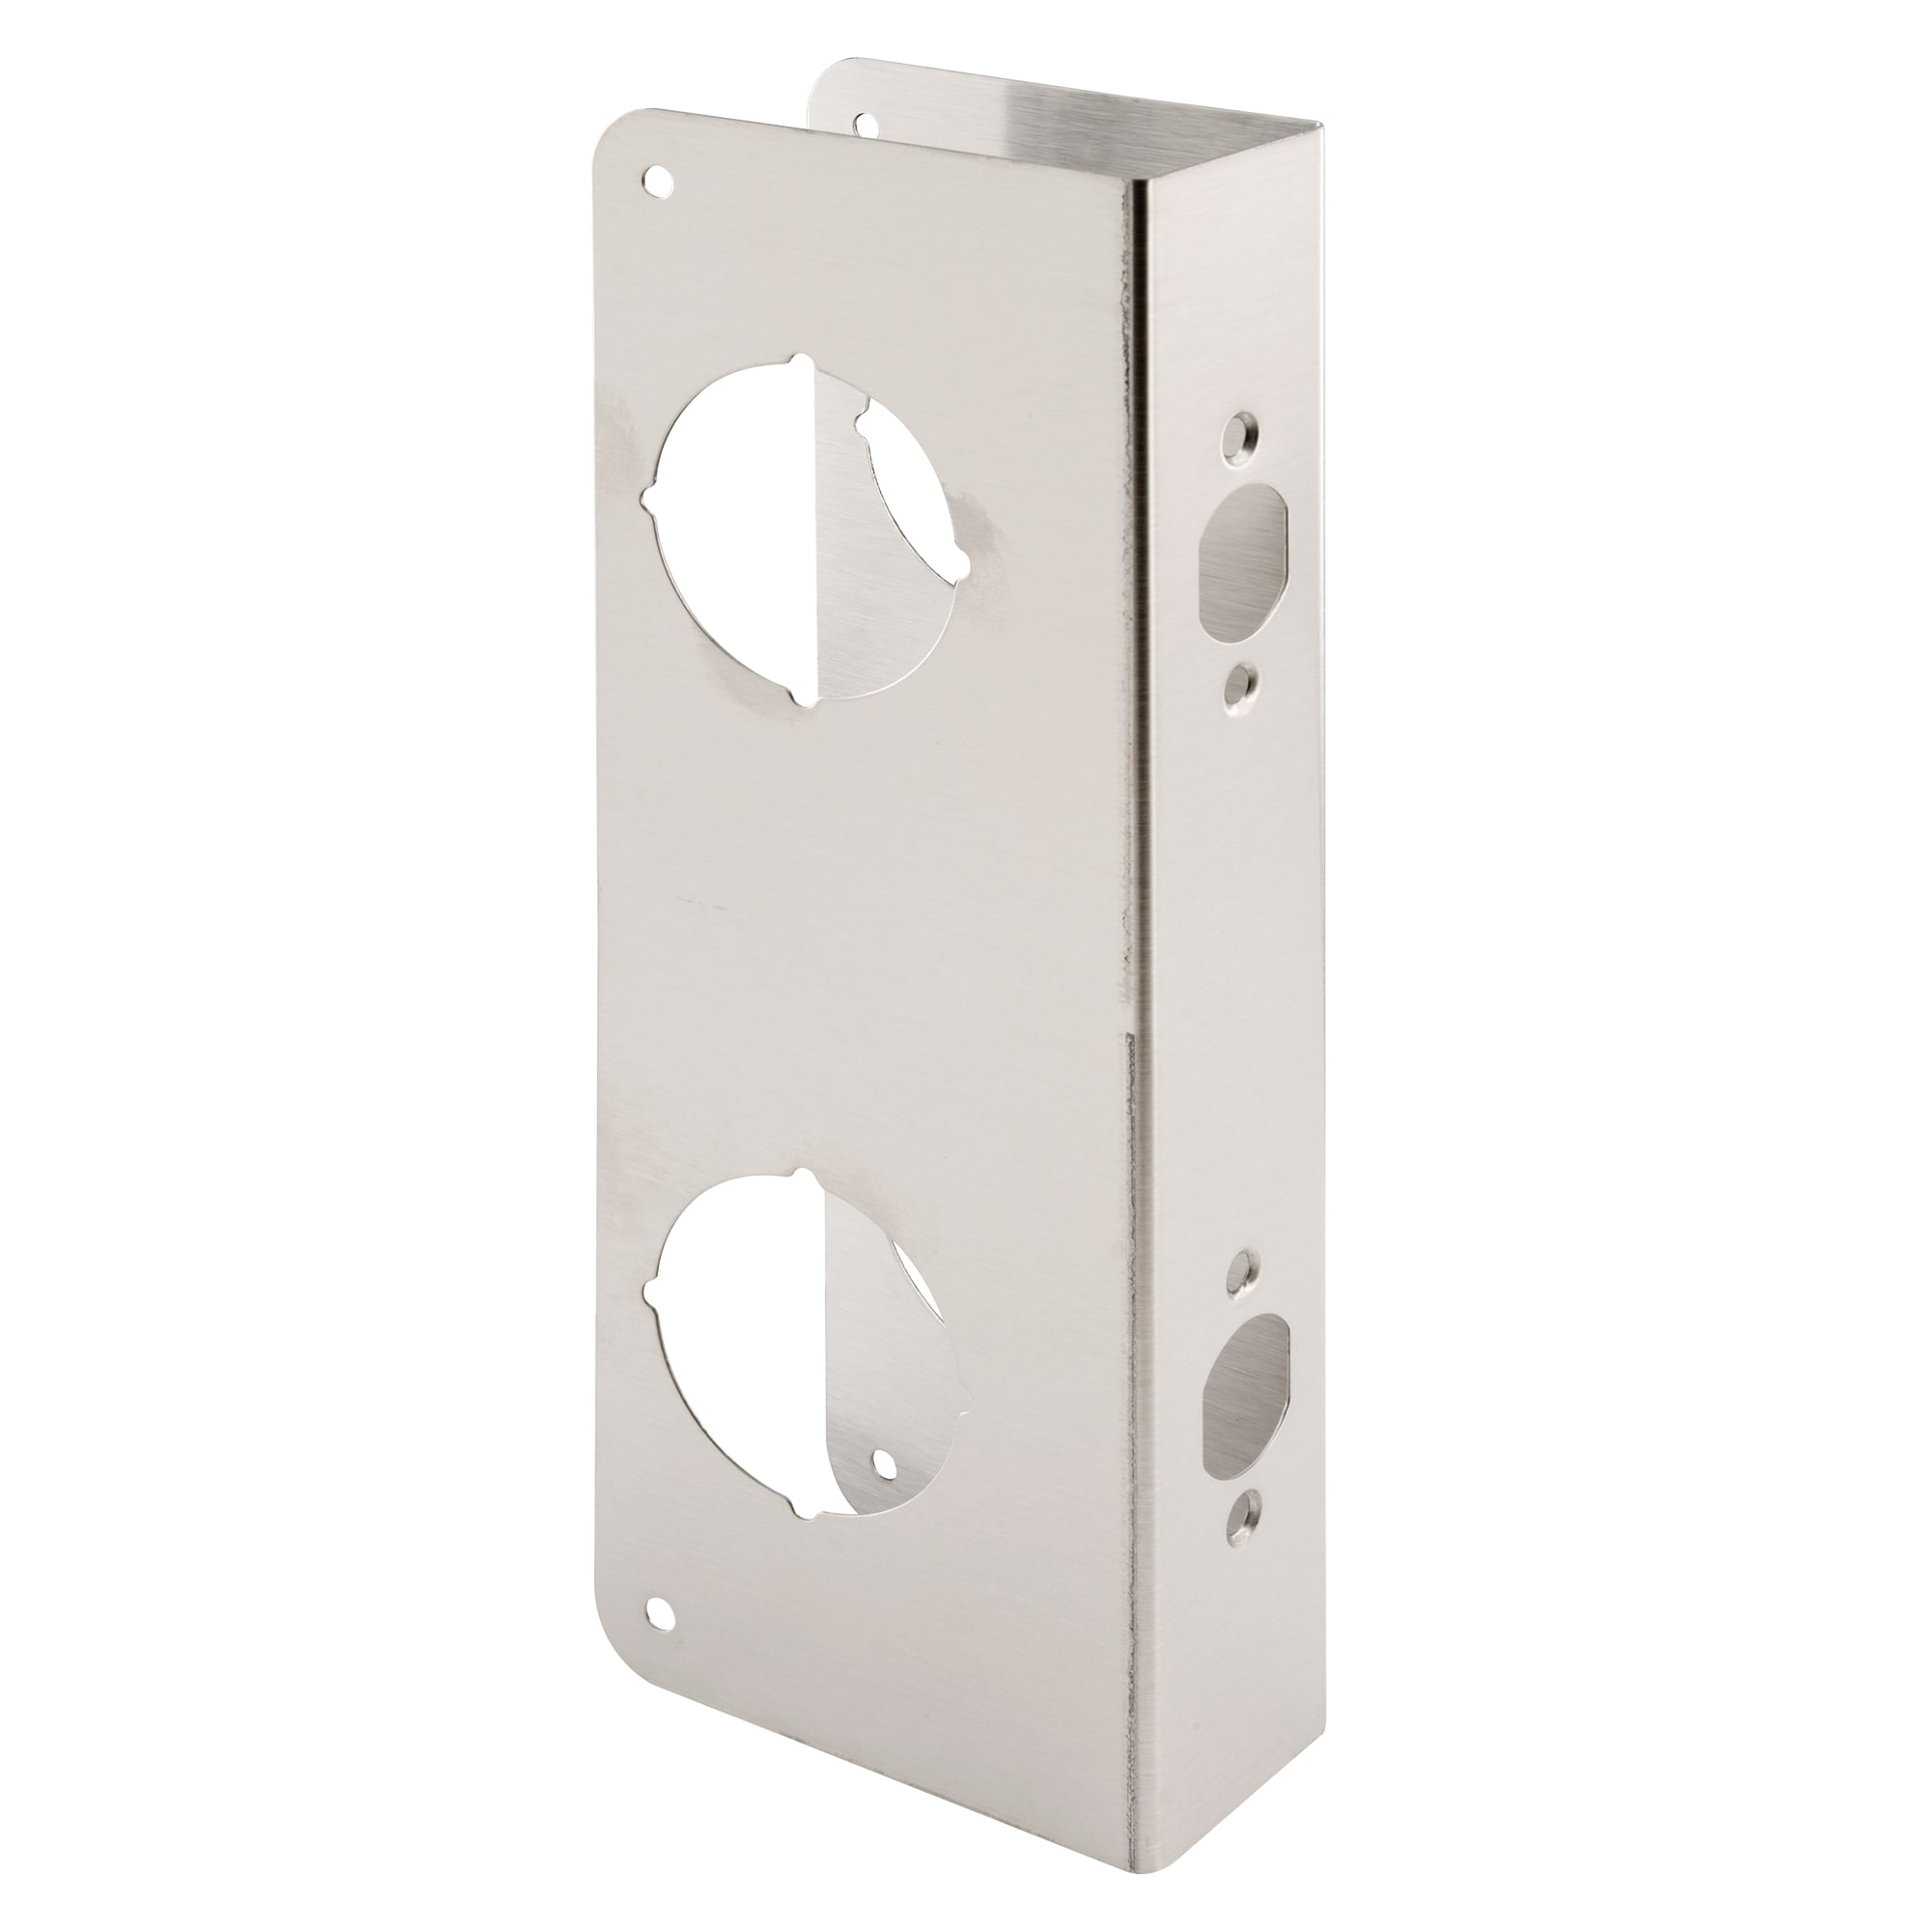 Fridge Door Safety Latch Lock, White, Universal Fit For Uneven